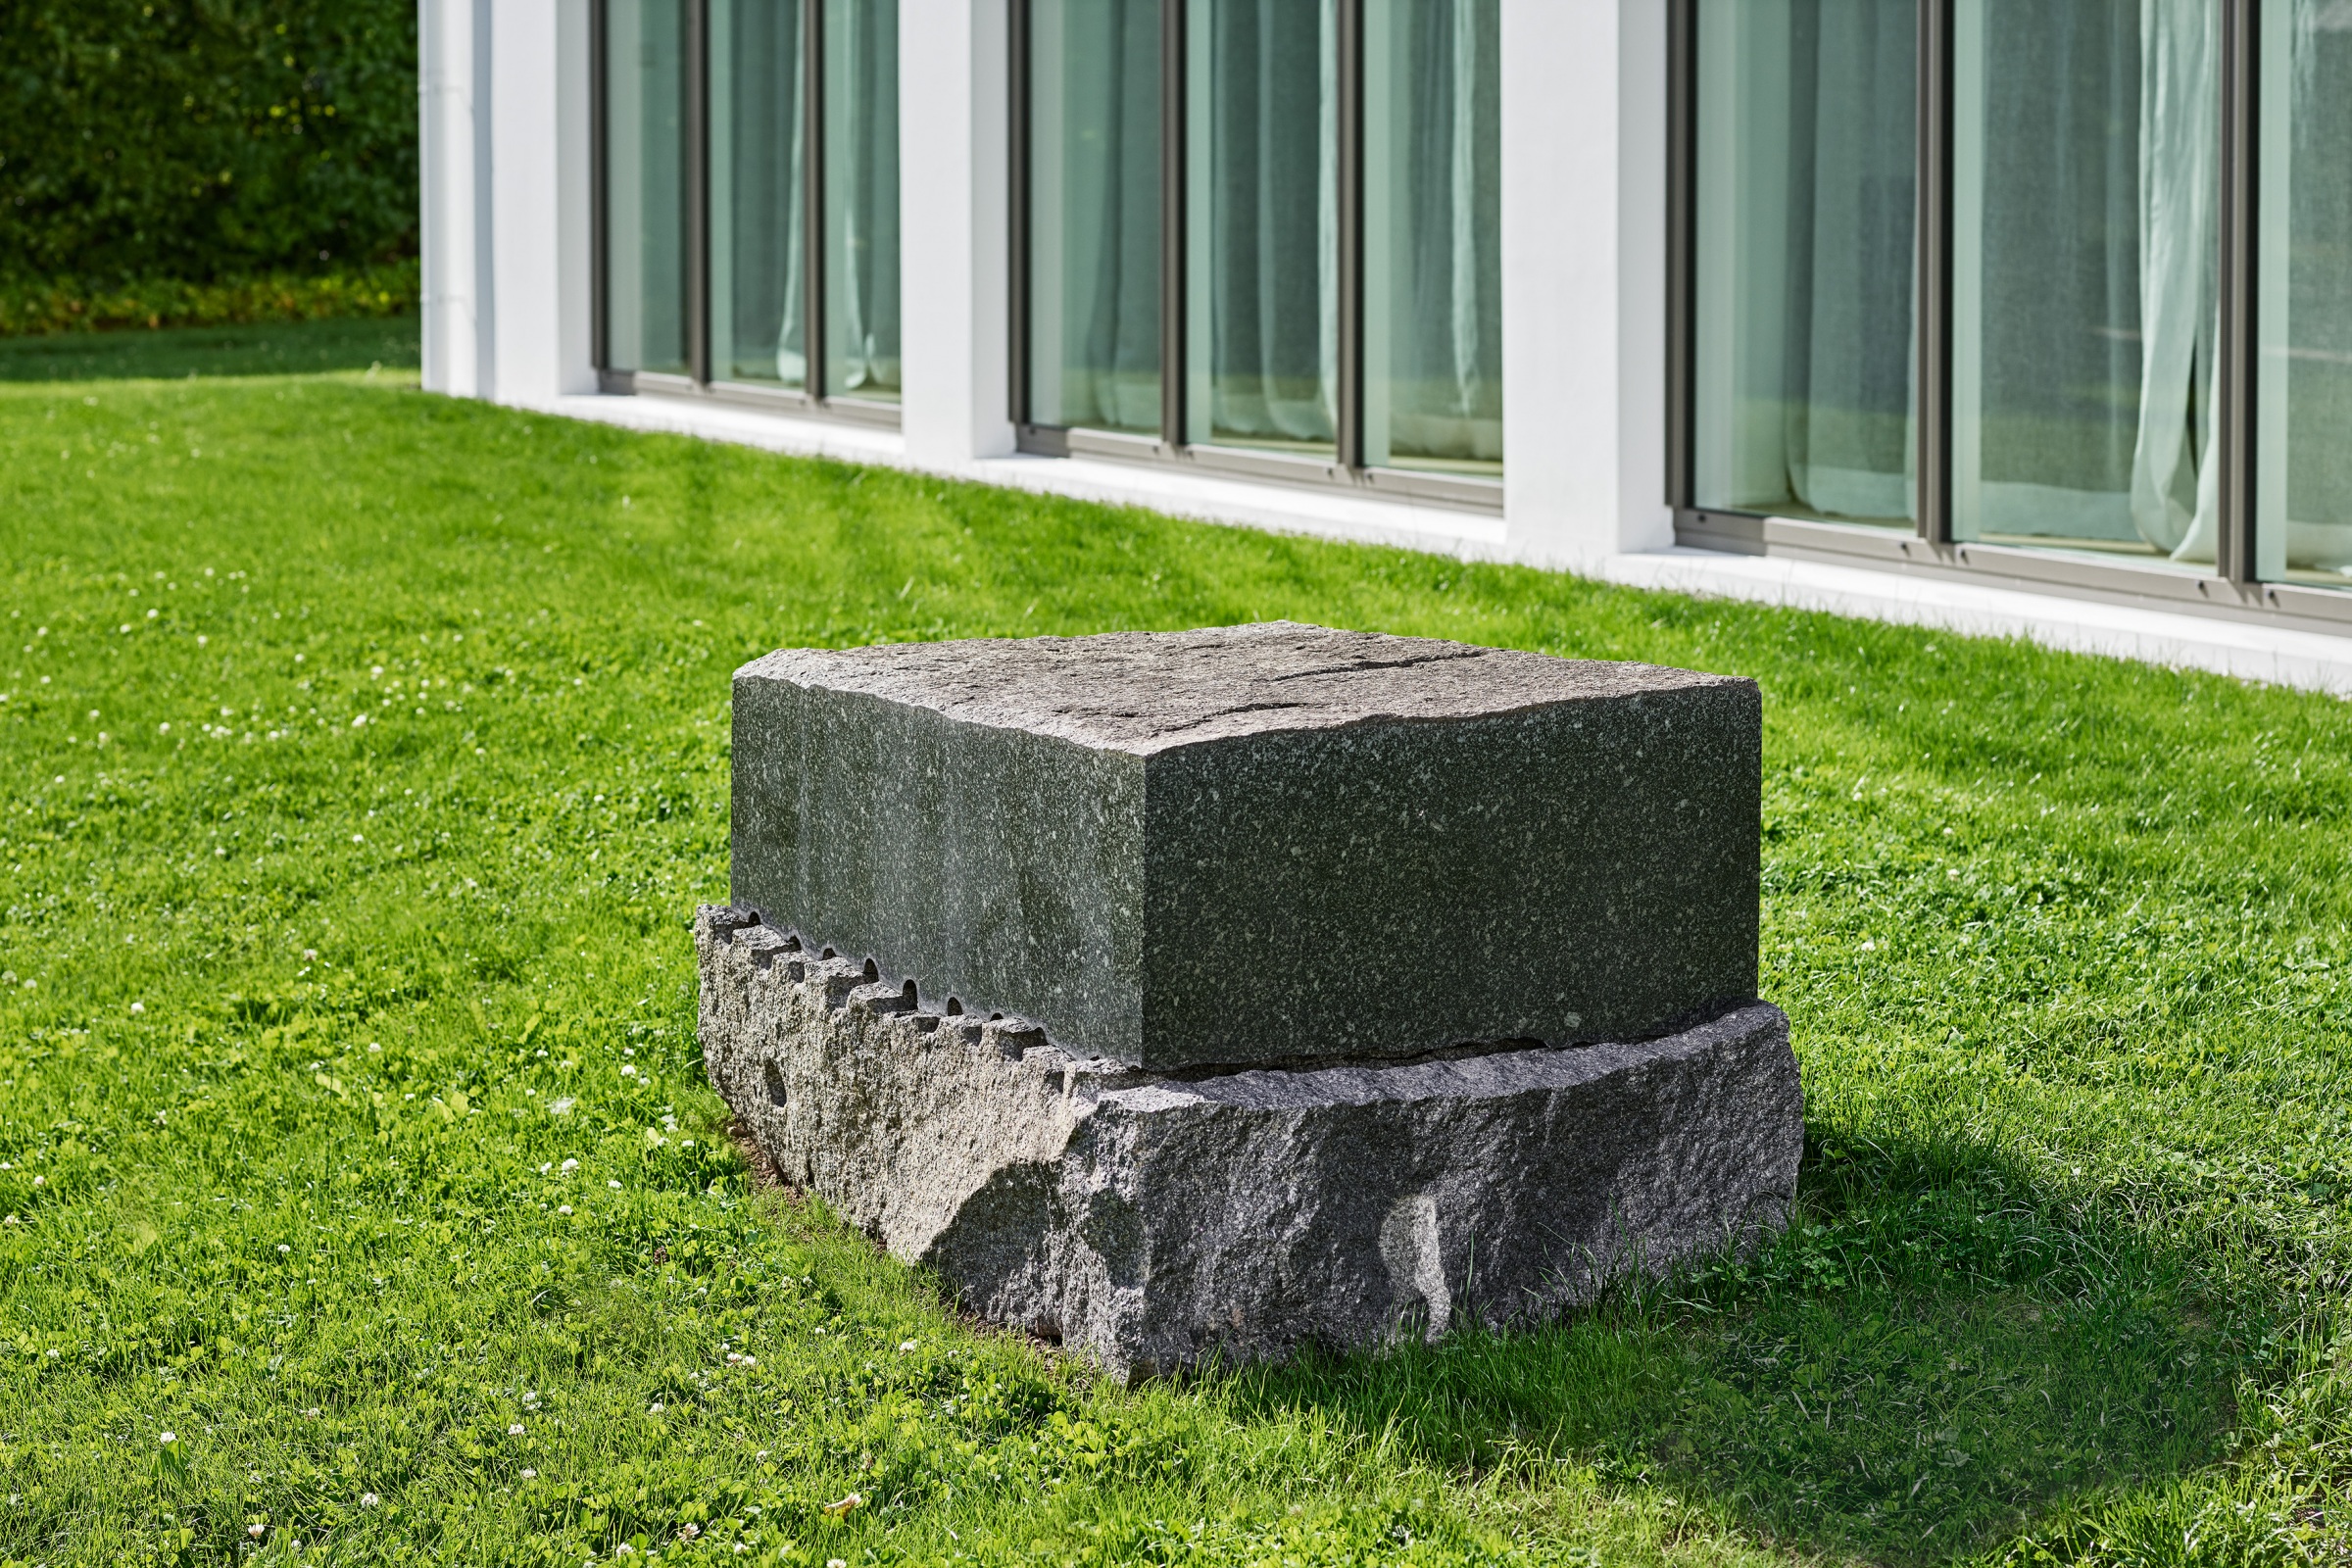 Ulrich Rückriem, Gebhardser Granit, 1988, granite, 113 x 82 x 68 cm.; 44 1/2 x 32 1/4 x 26 3/4 in.